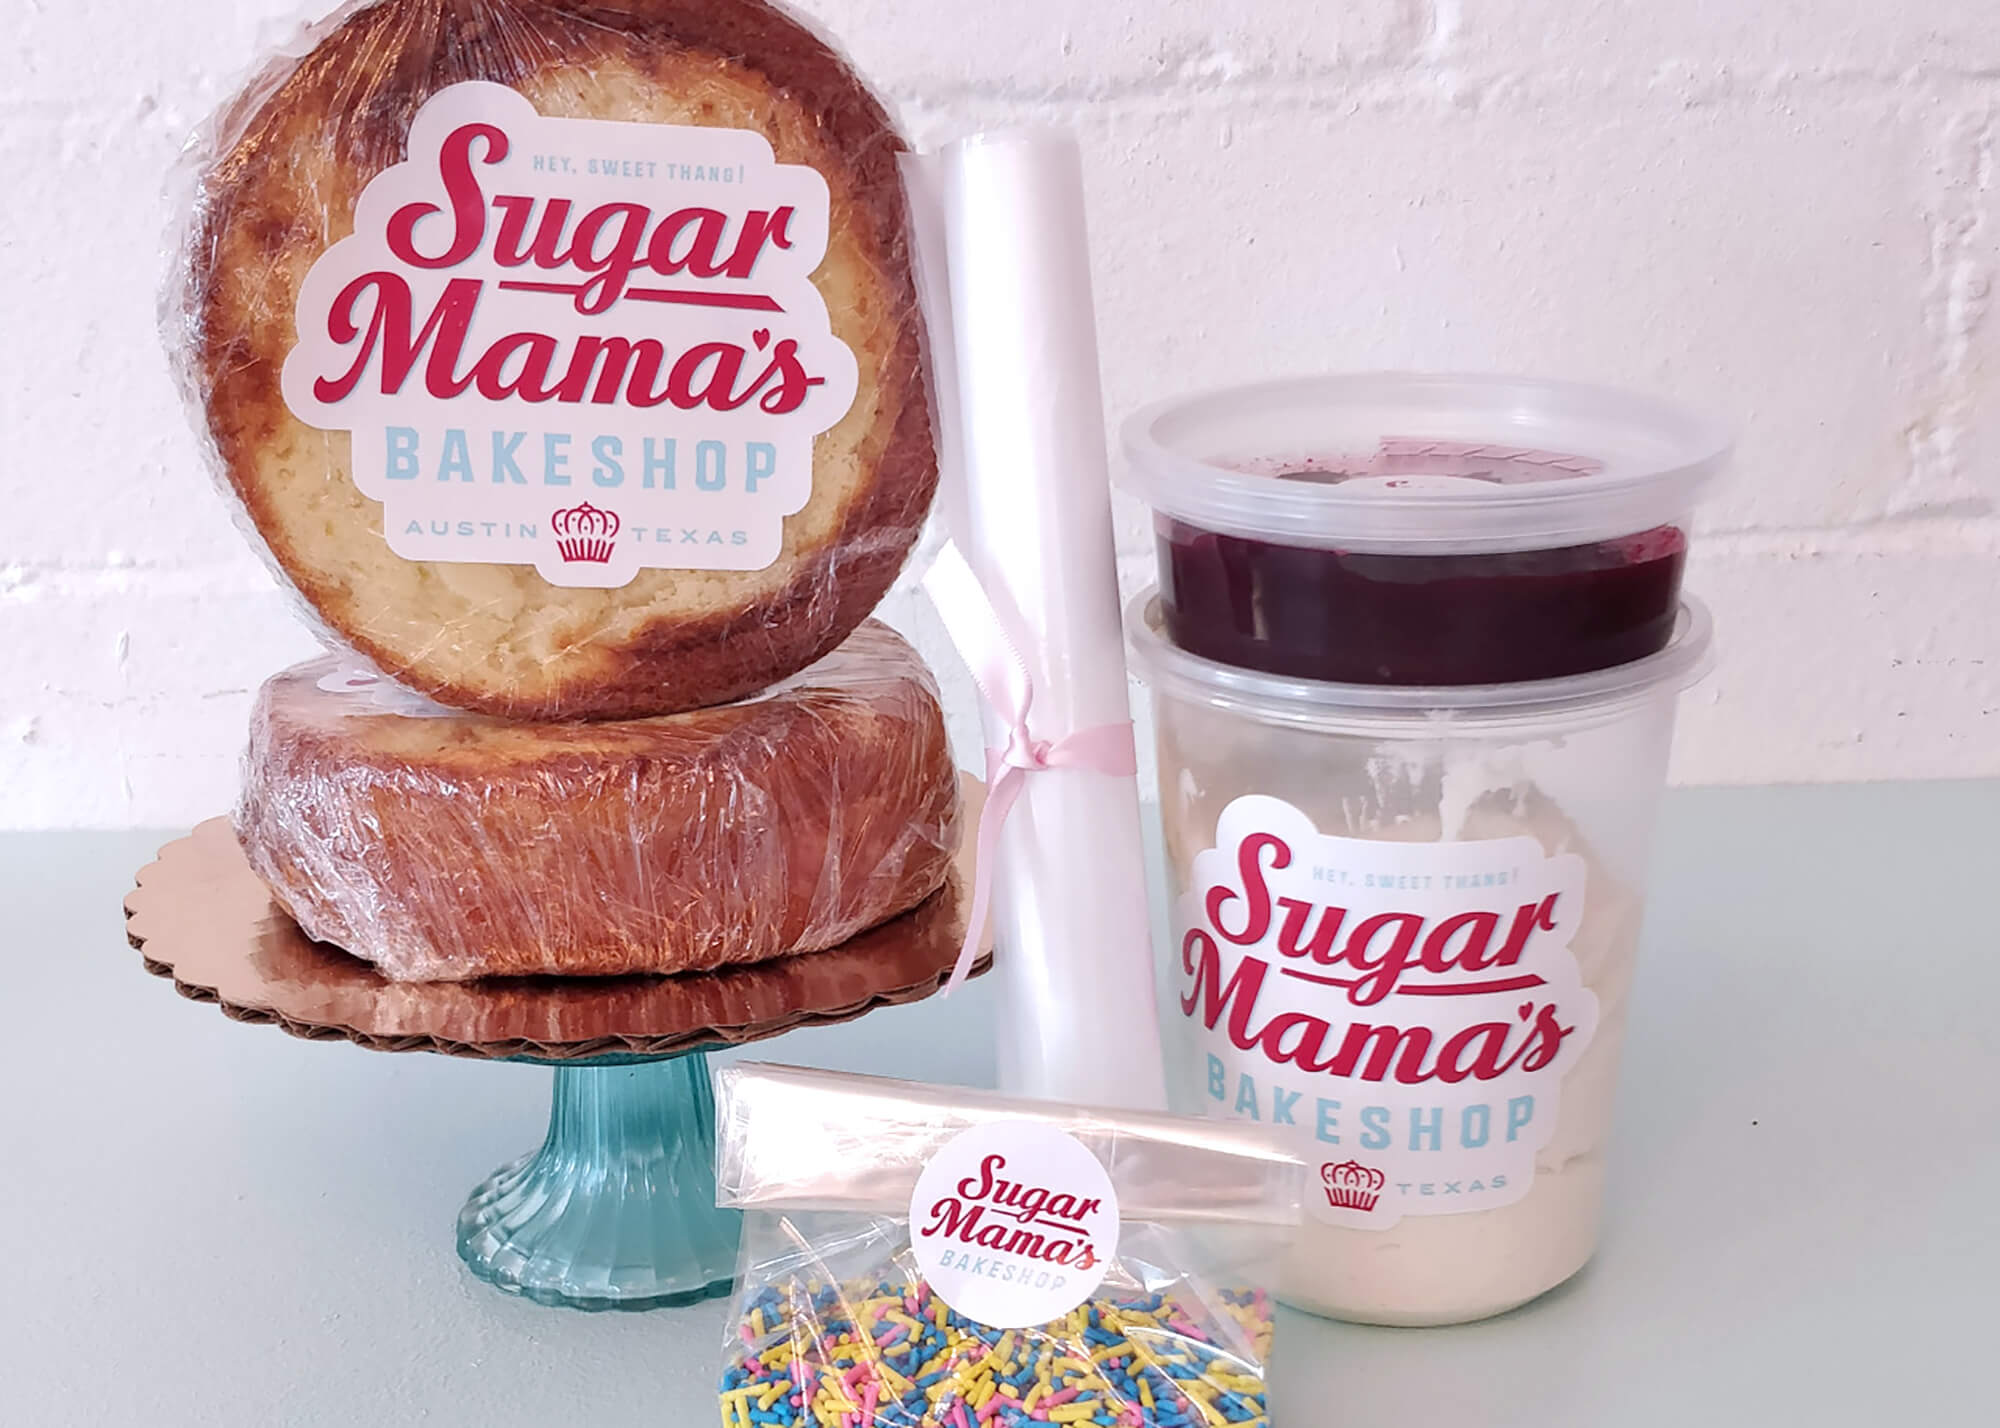 Cake decorating kit from Sugar Mamas bakery